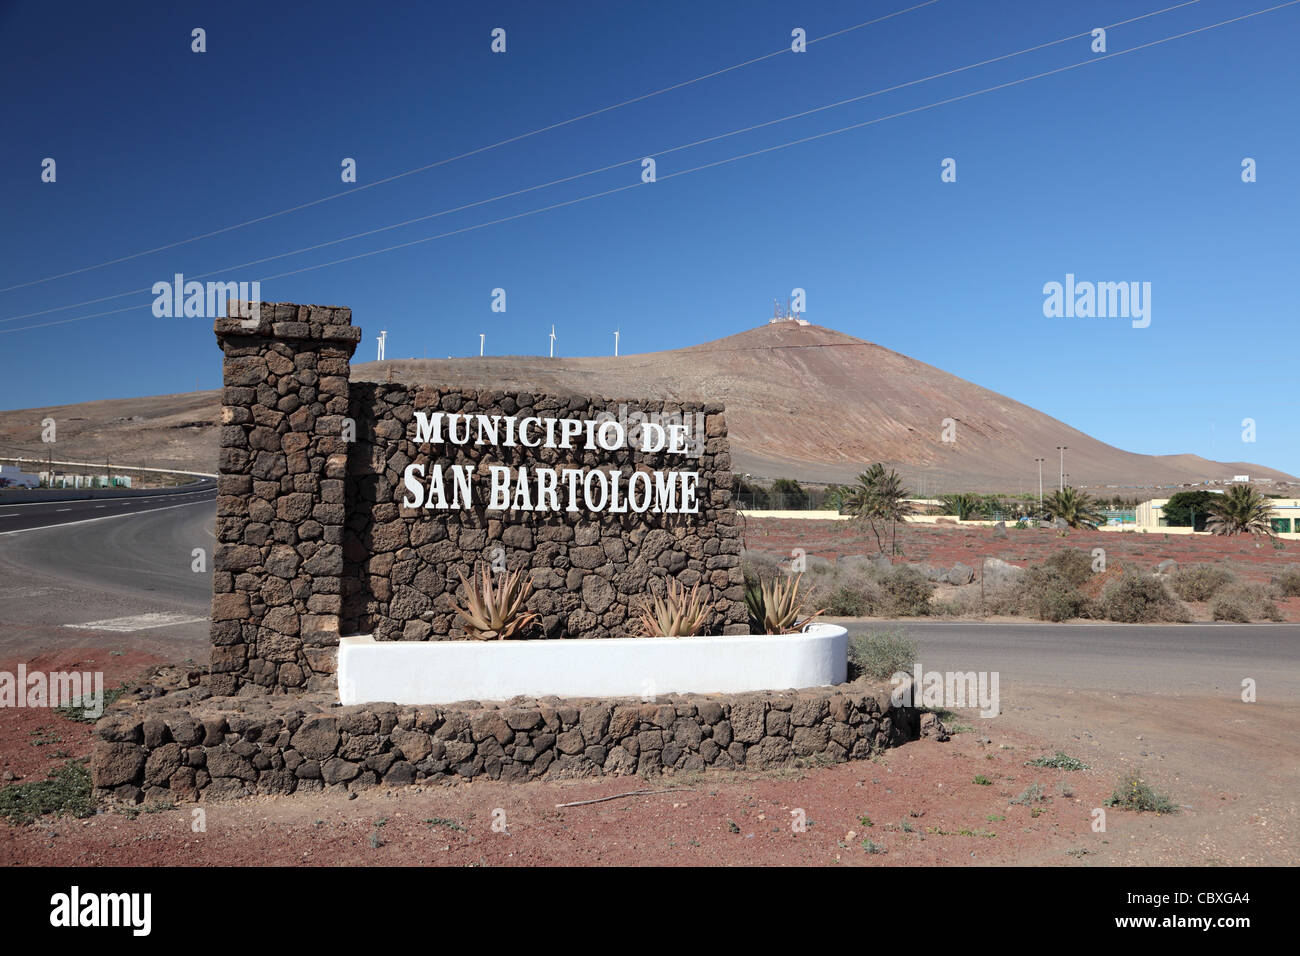 Municipio de San Bartolome on Canary Island Lanzarote, Spain Stock Photo